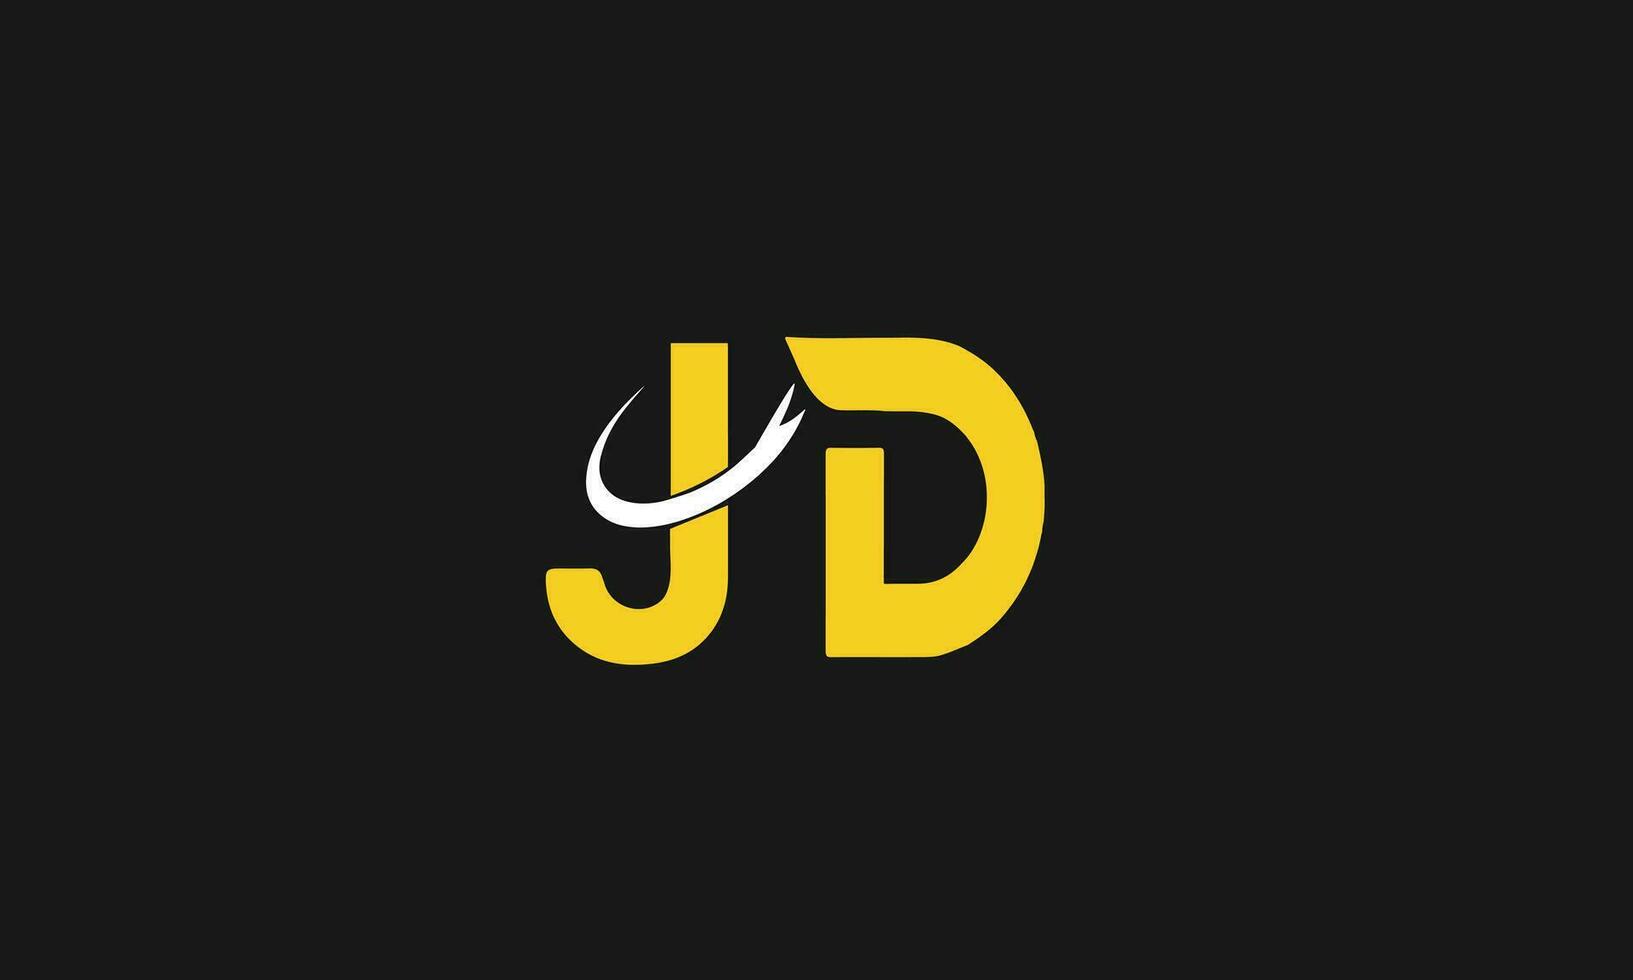 dj ou jd e d ou j carta inicial logotipo projeto, vetor modelo